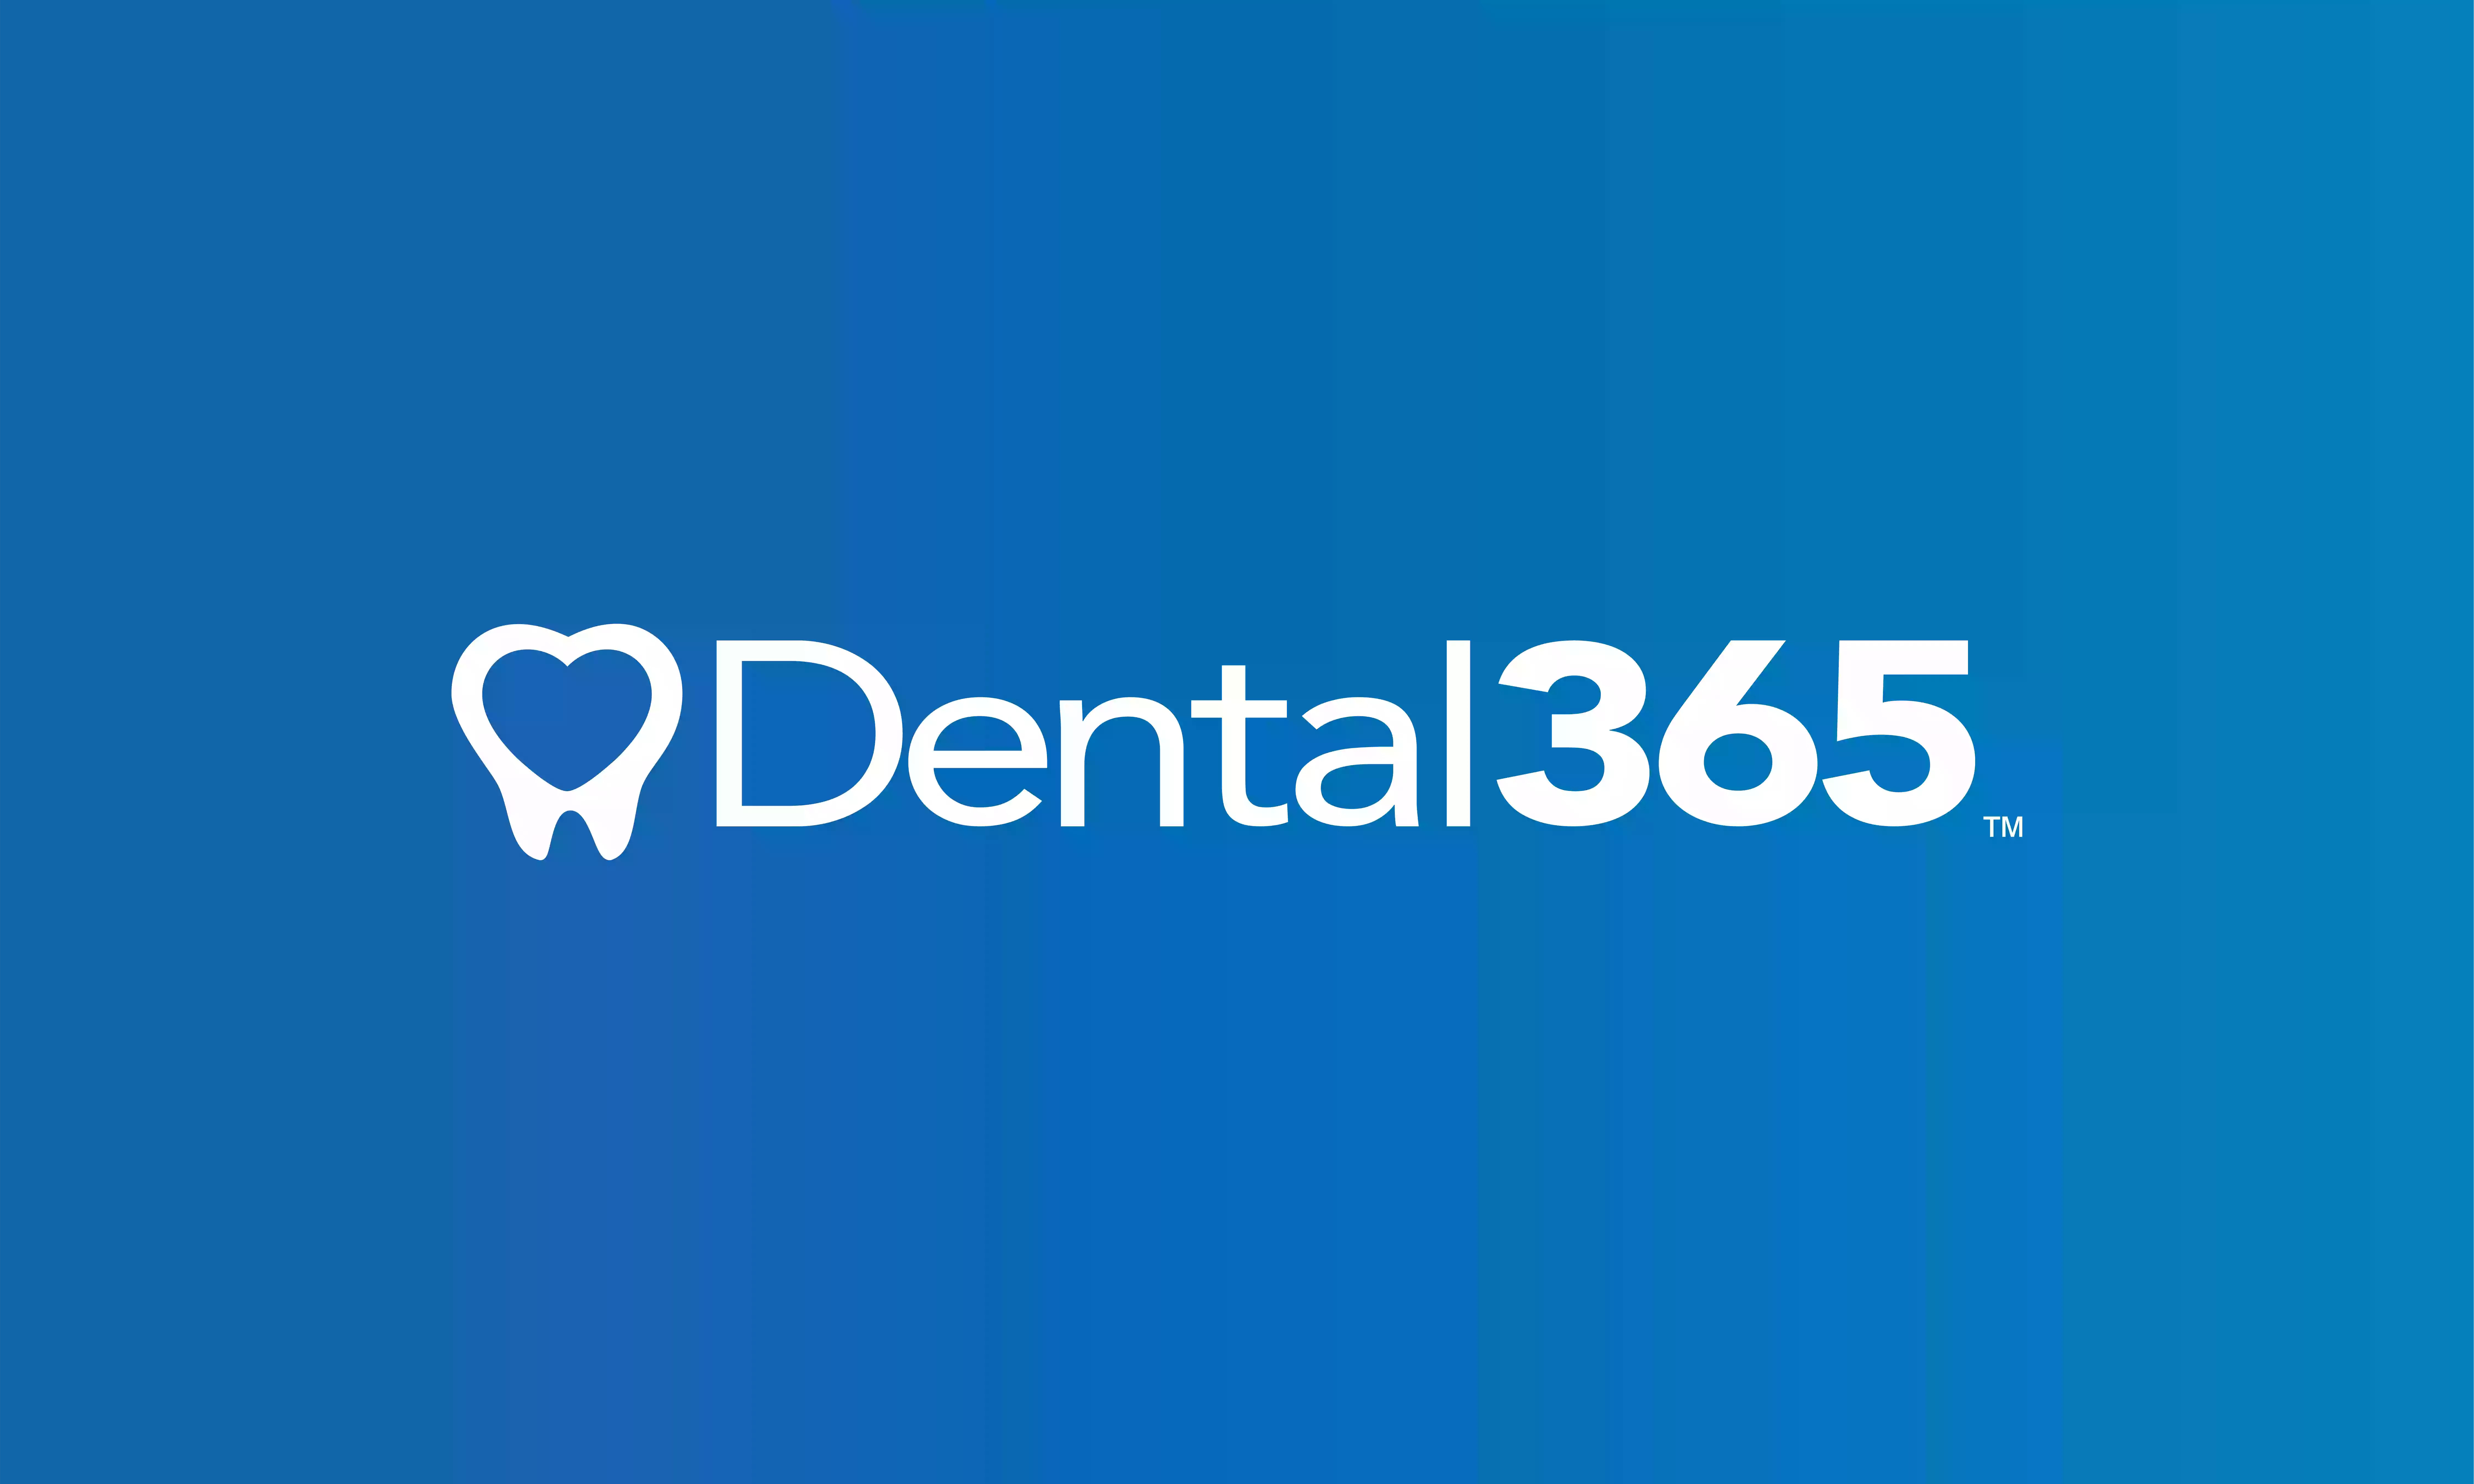 Warren Family Dental - A Dental365 Company